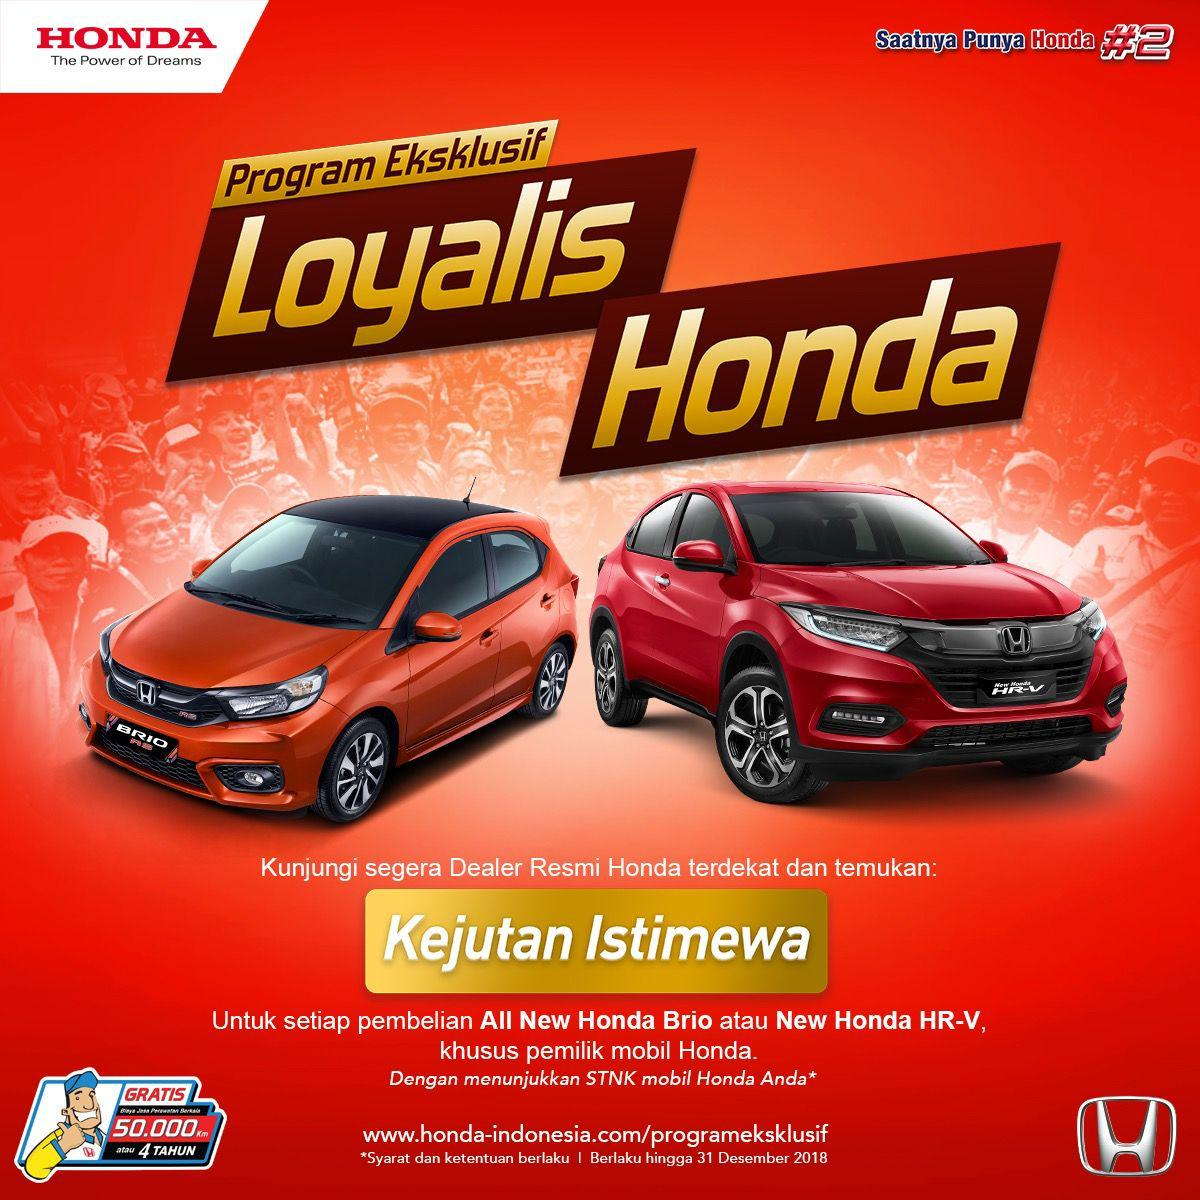 Program Eksklusif - Loyalis Honda